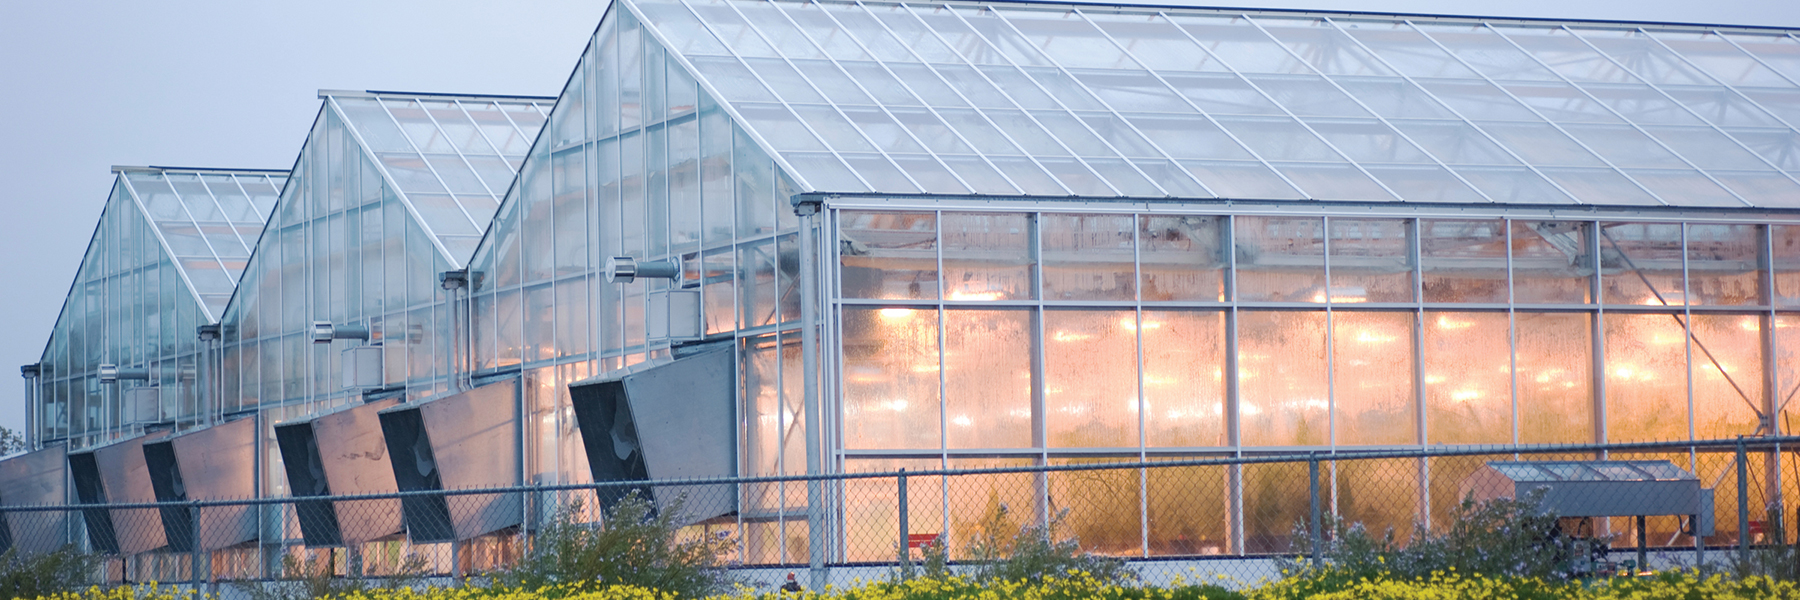 inside polycarbonate greenhouse